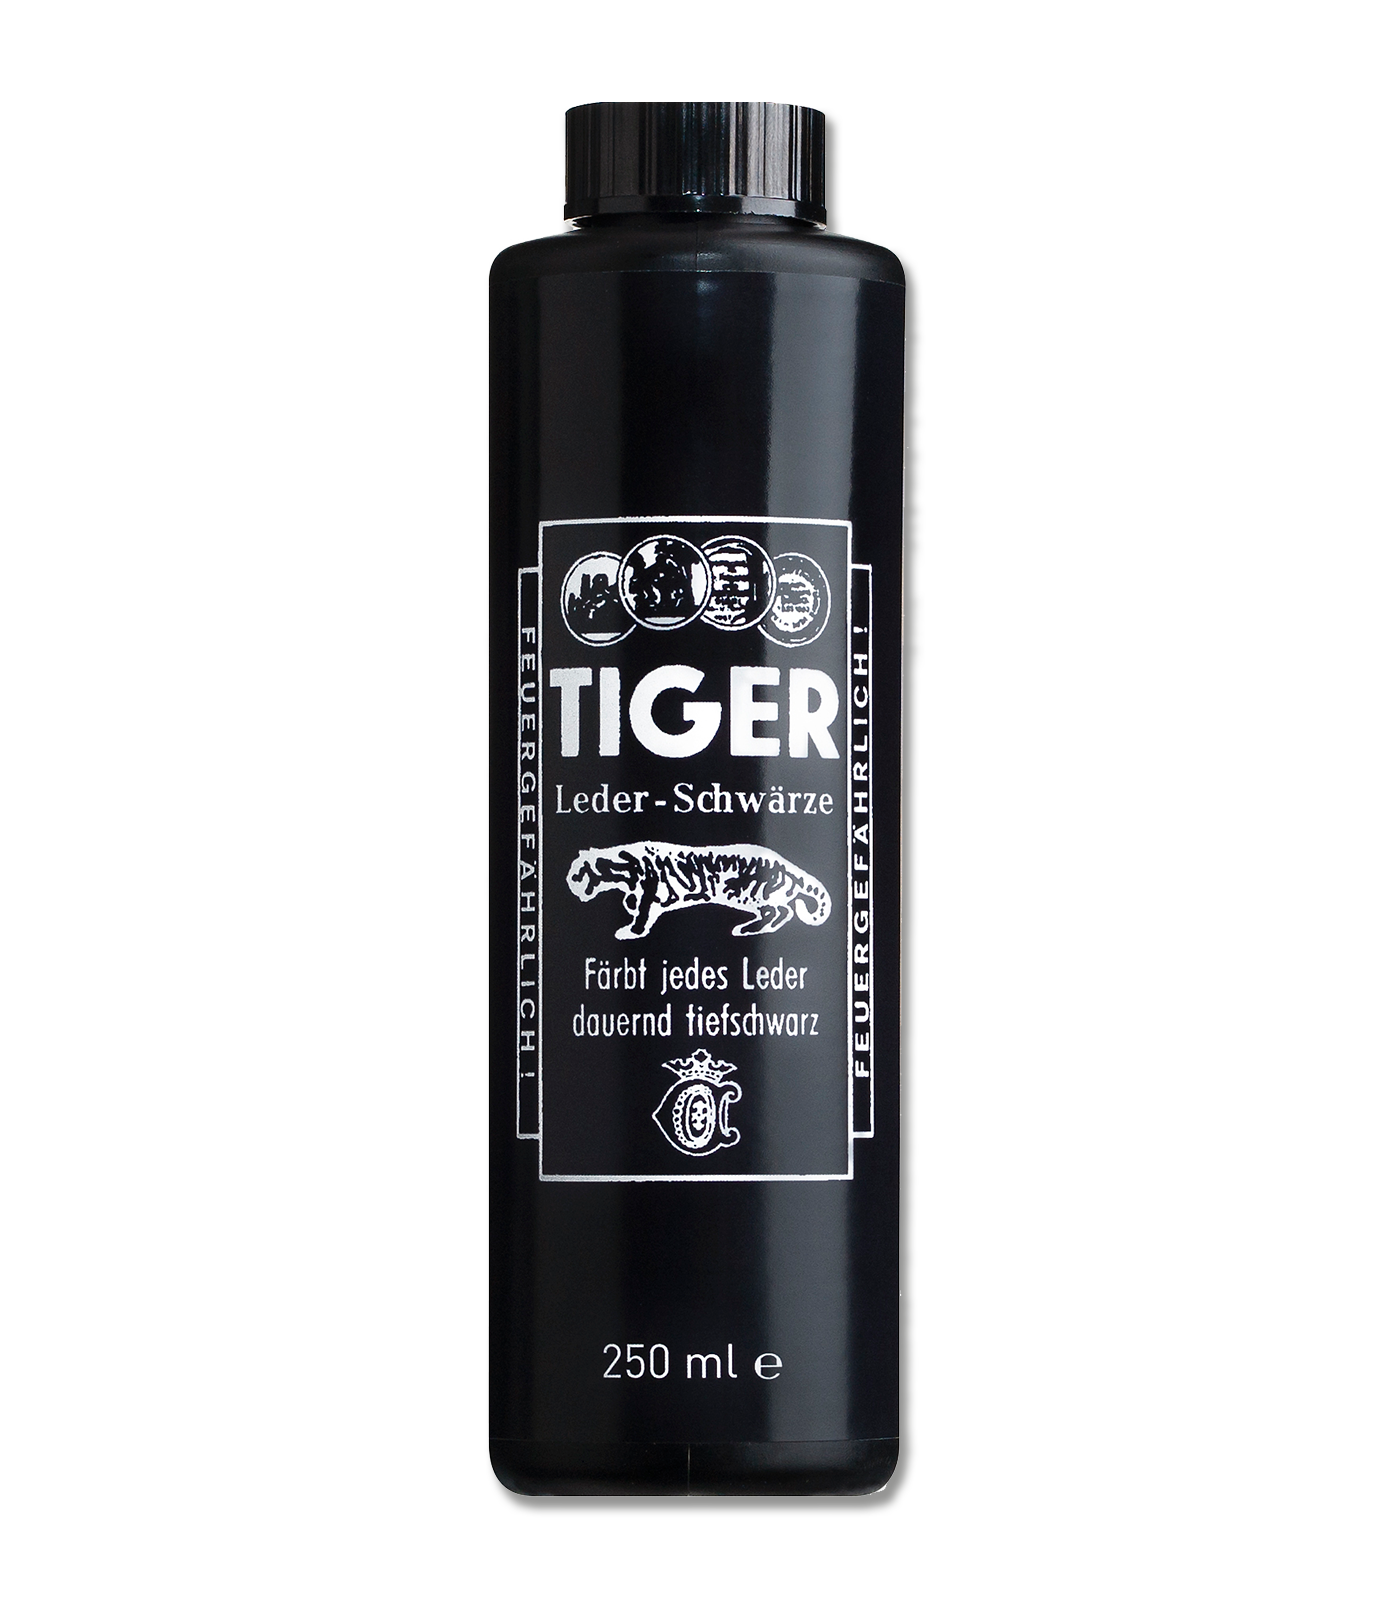 TIGER Leder-negro, 250 ml